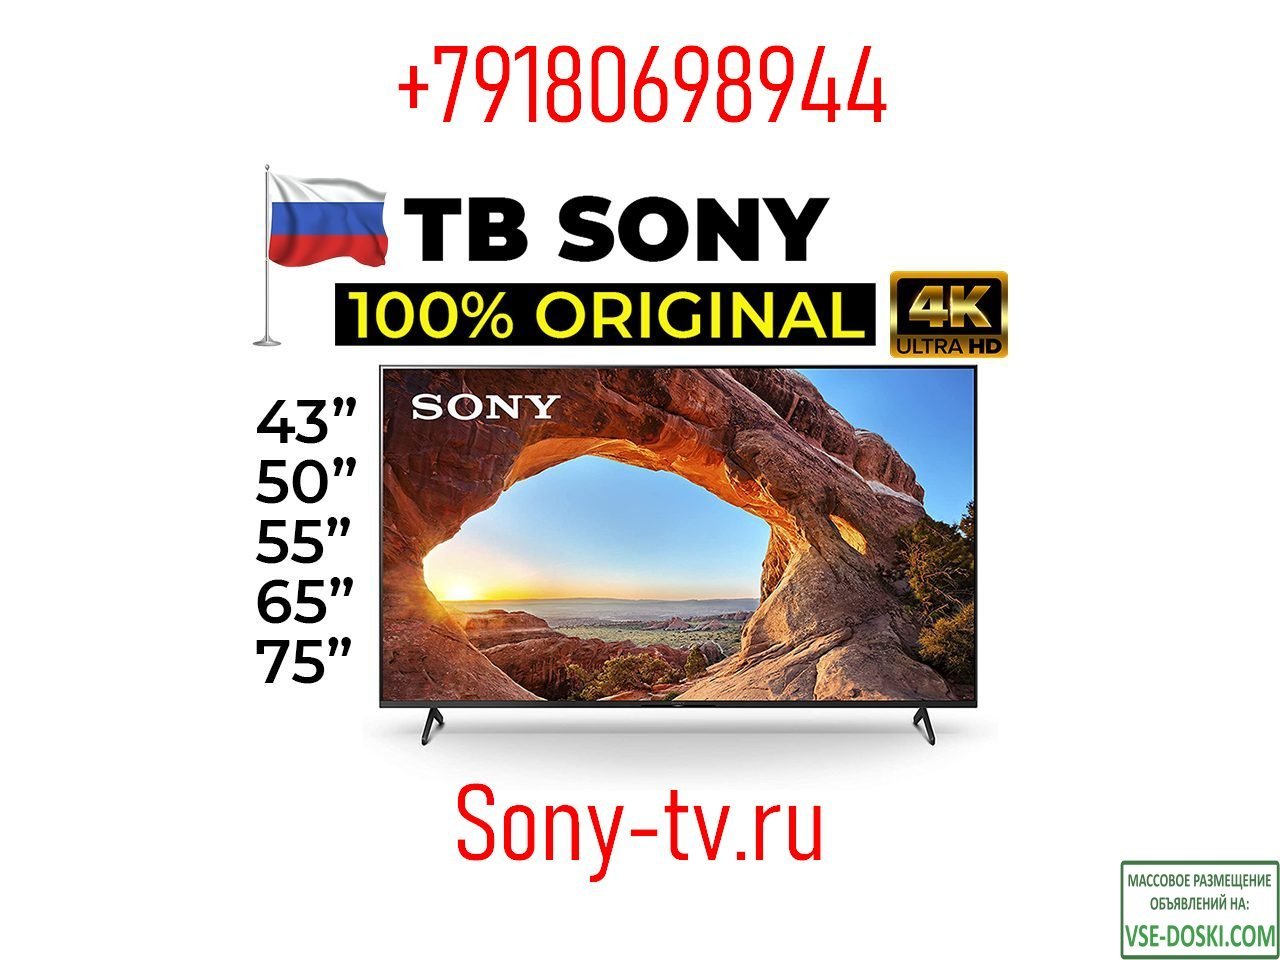 LED телевизоры Sony Smart TV 2022 год оригинал +79180698944 sony-tv.ru